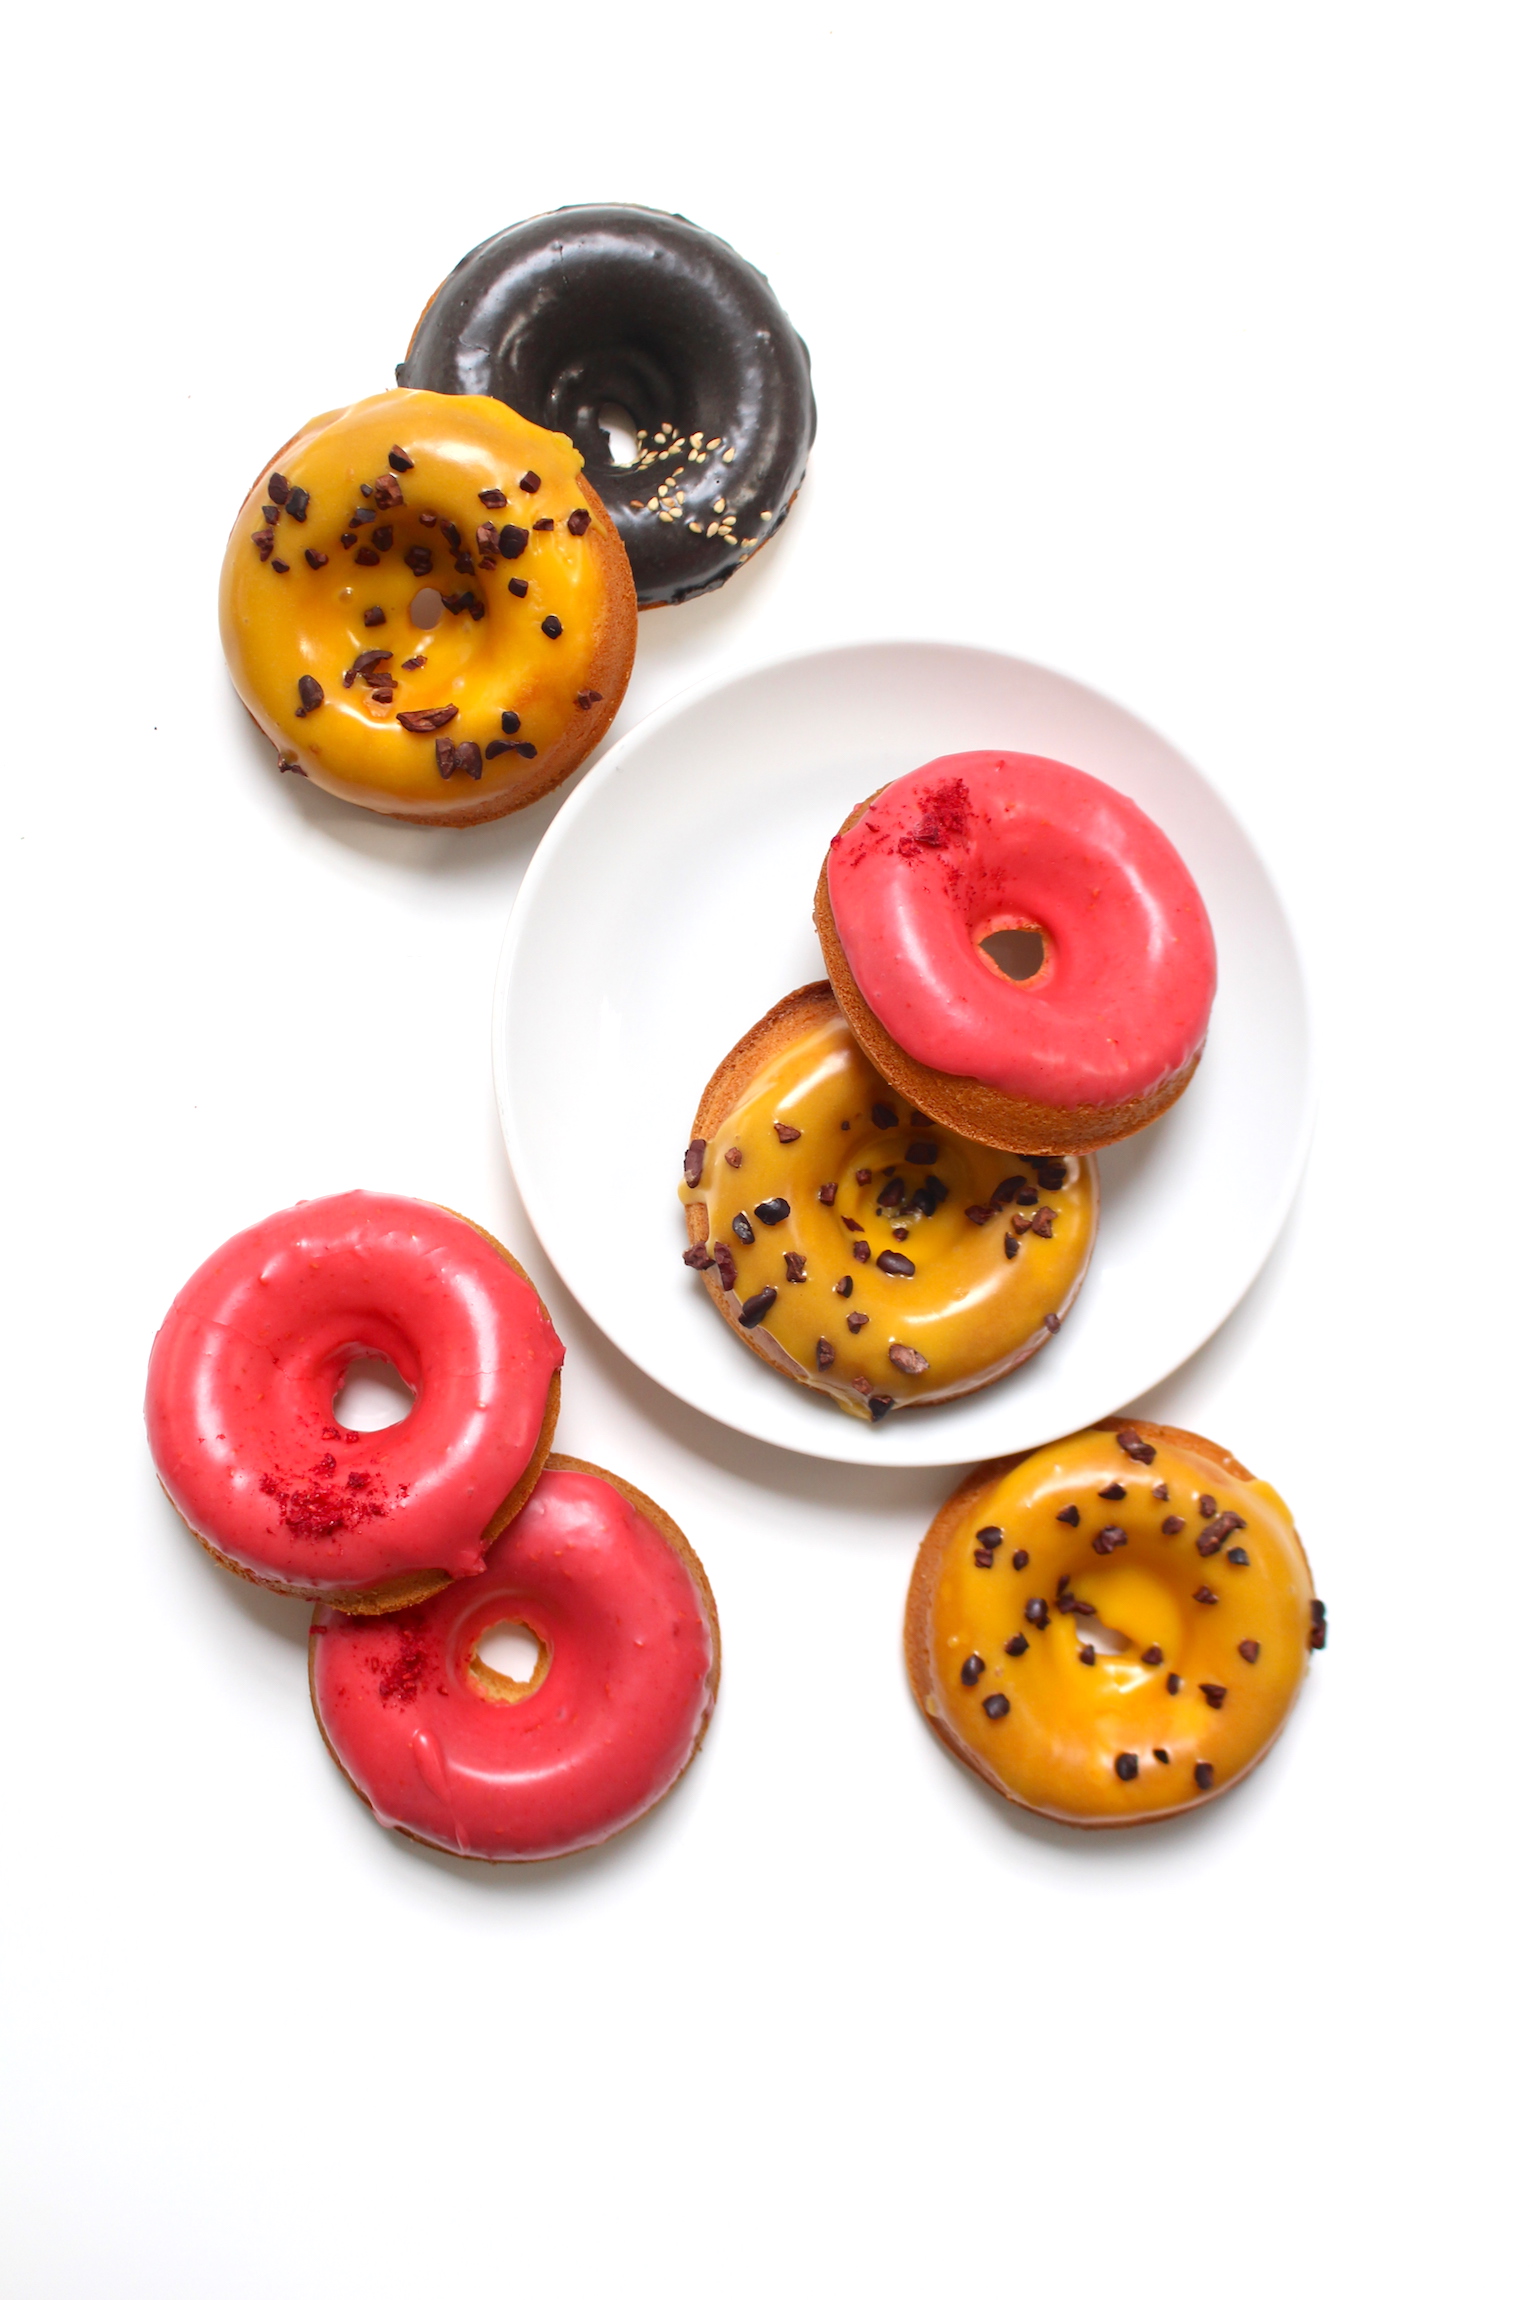 An assortment of mochi donuts